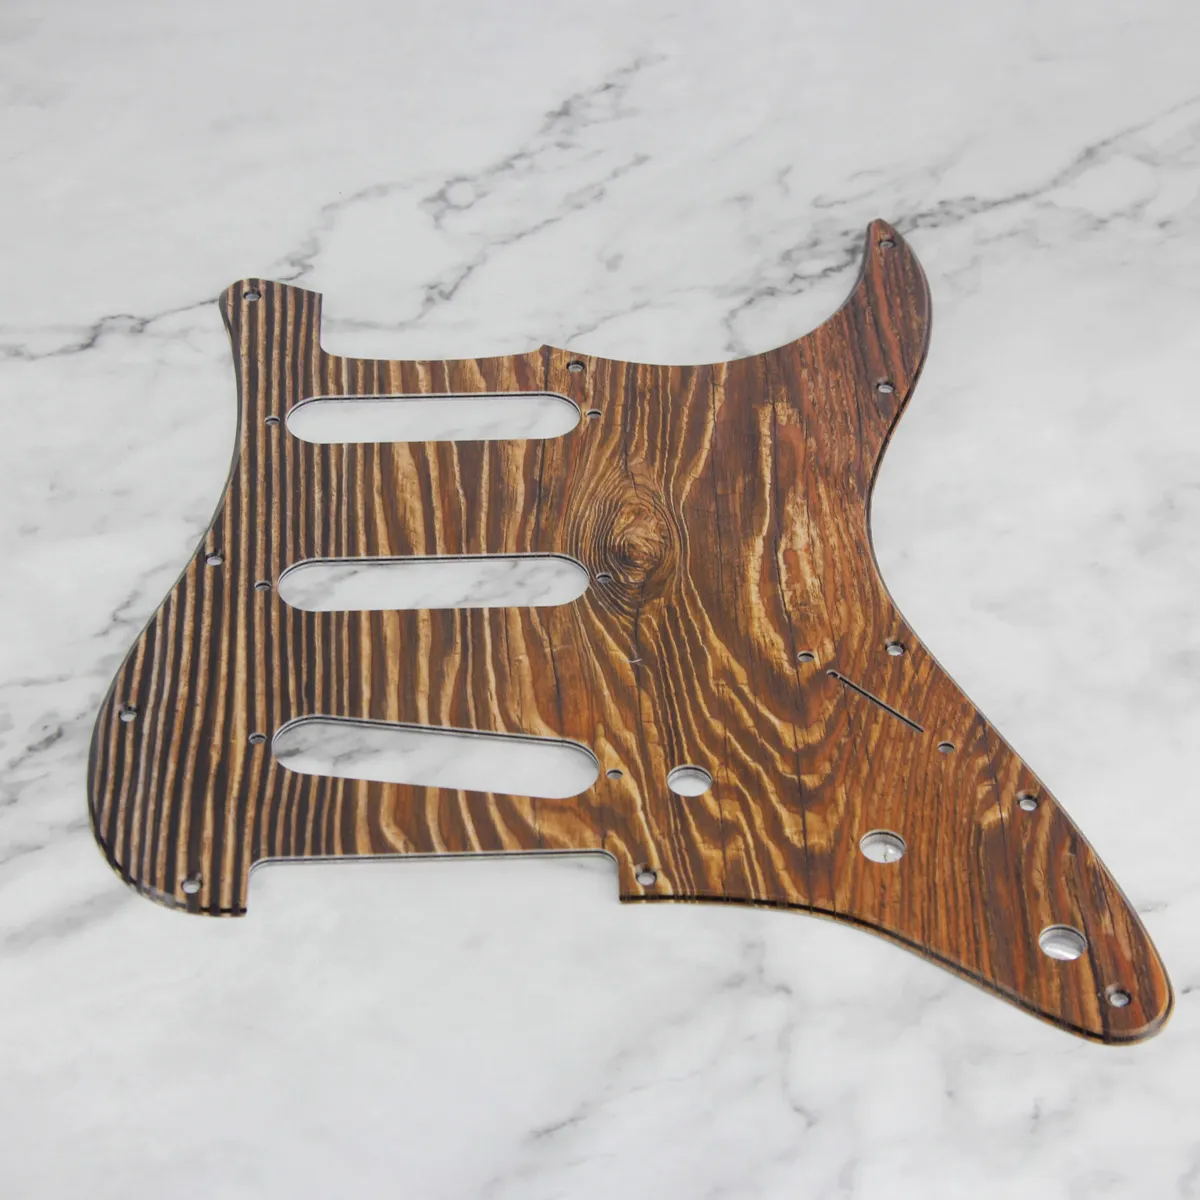 The Wood Color SSS PickGuard Guitar Plate с задними винтами для 11 -луночных деталей электрогитары